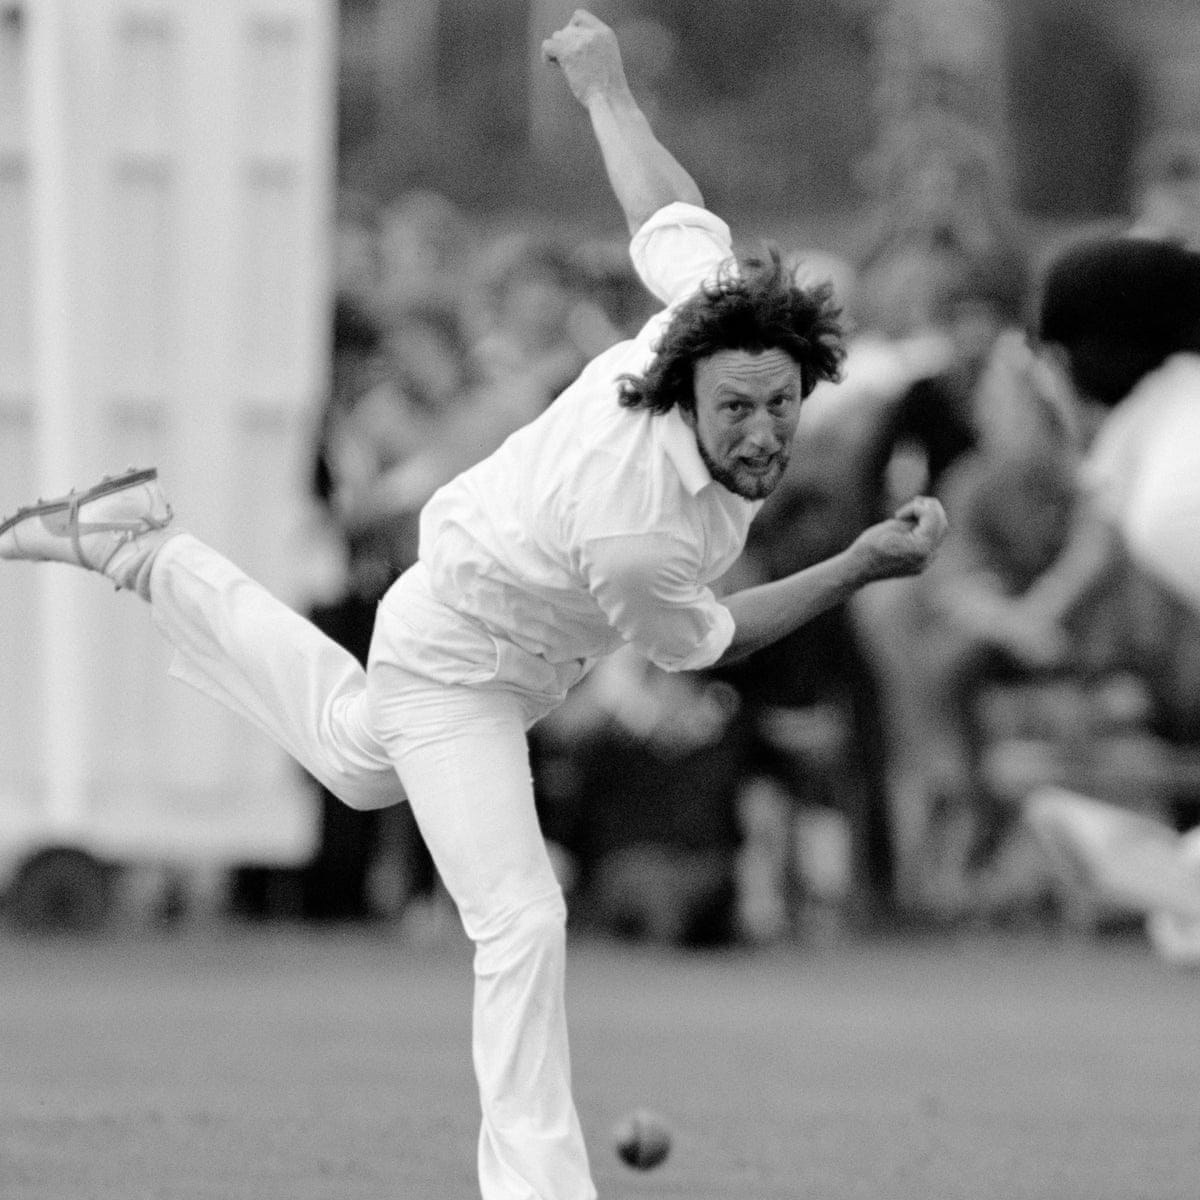 Mike Hendrick obituary | Cricket | The Guardian